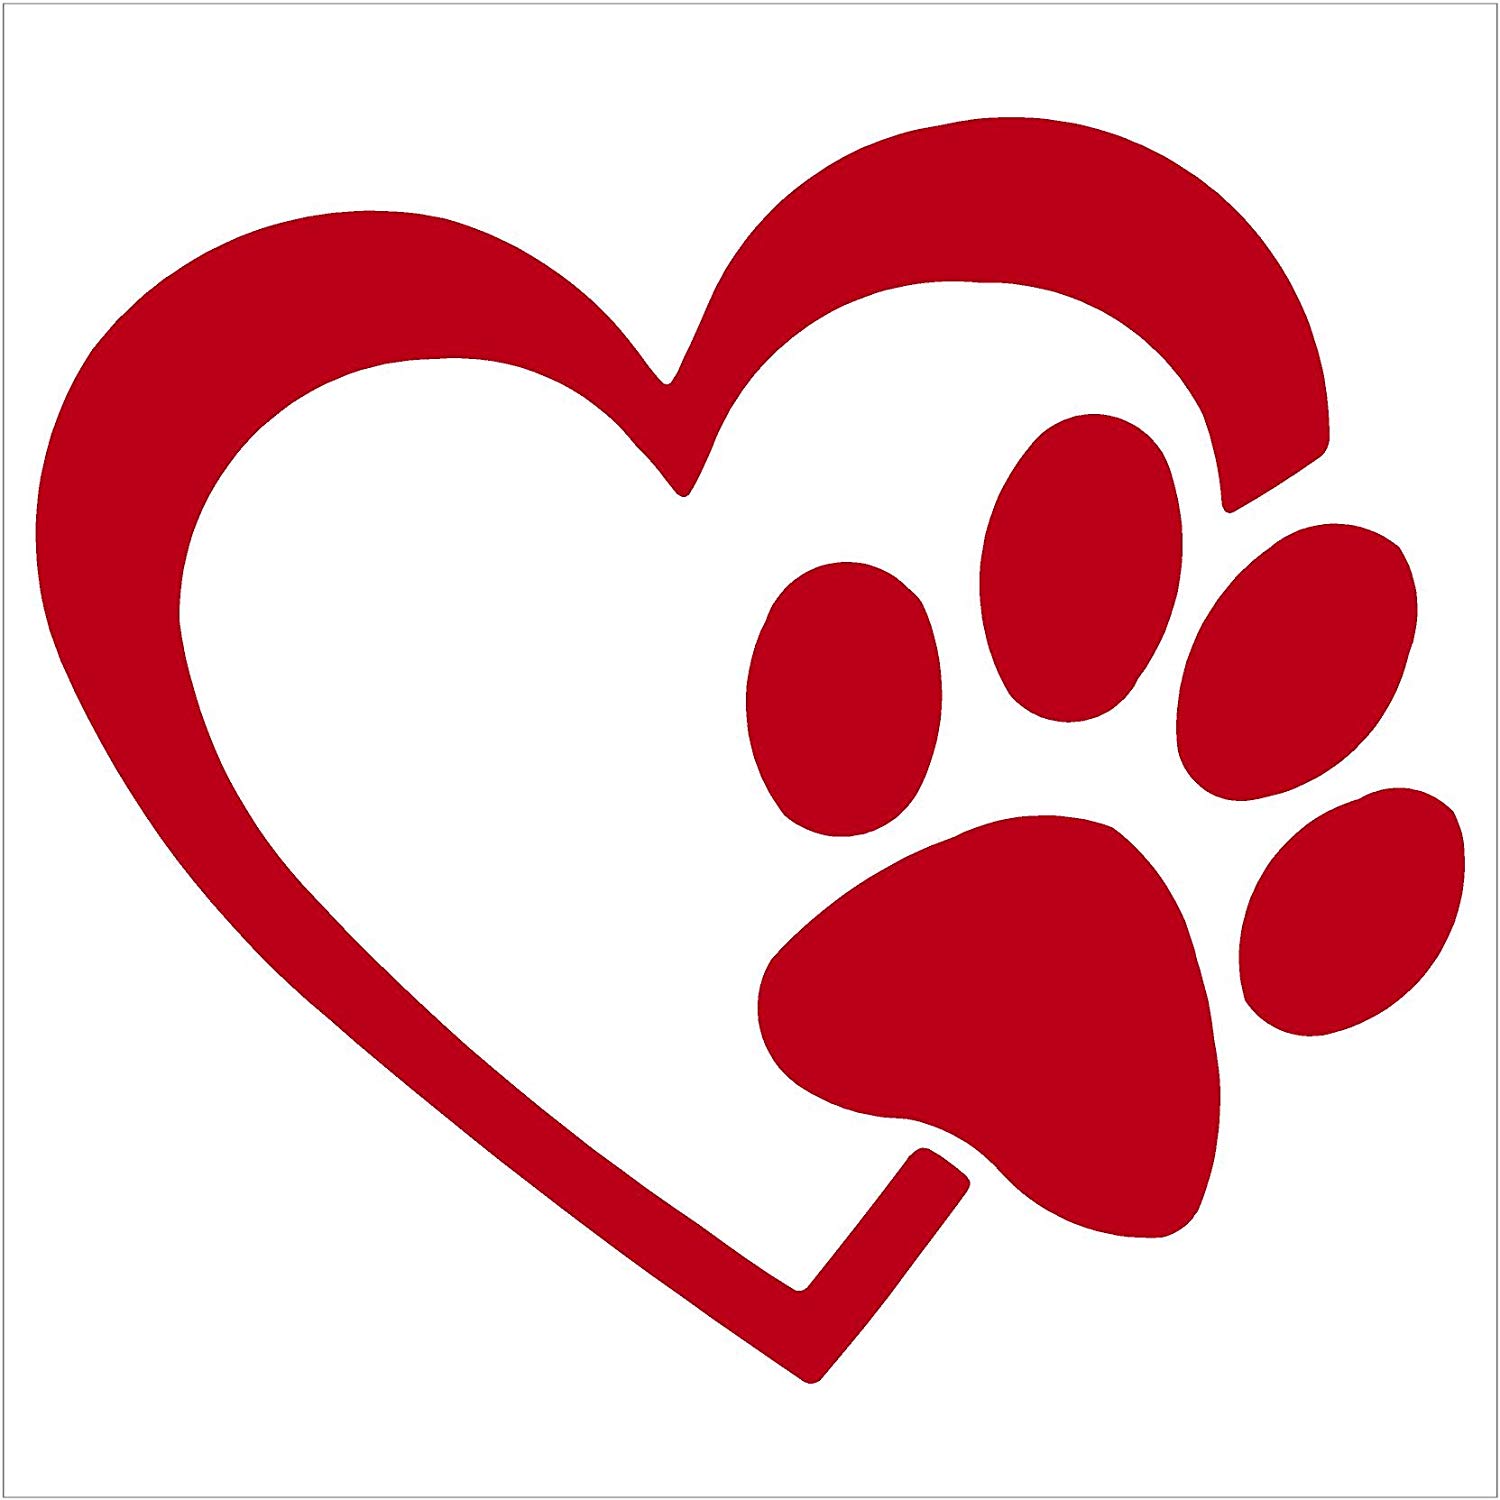 Pet heart. Лапка с сердечком. Сердце с лапой собаки. Лапа в сердце. Лапа с сердечком.